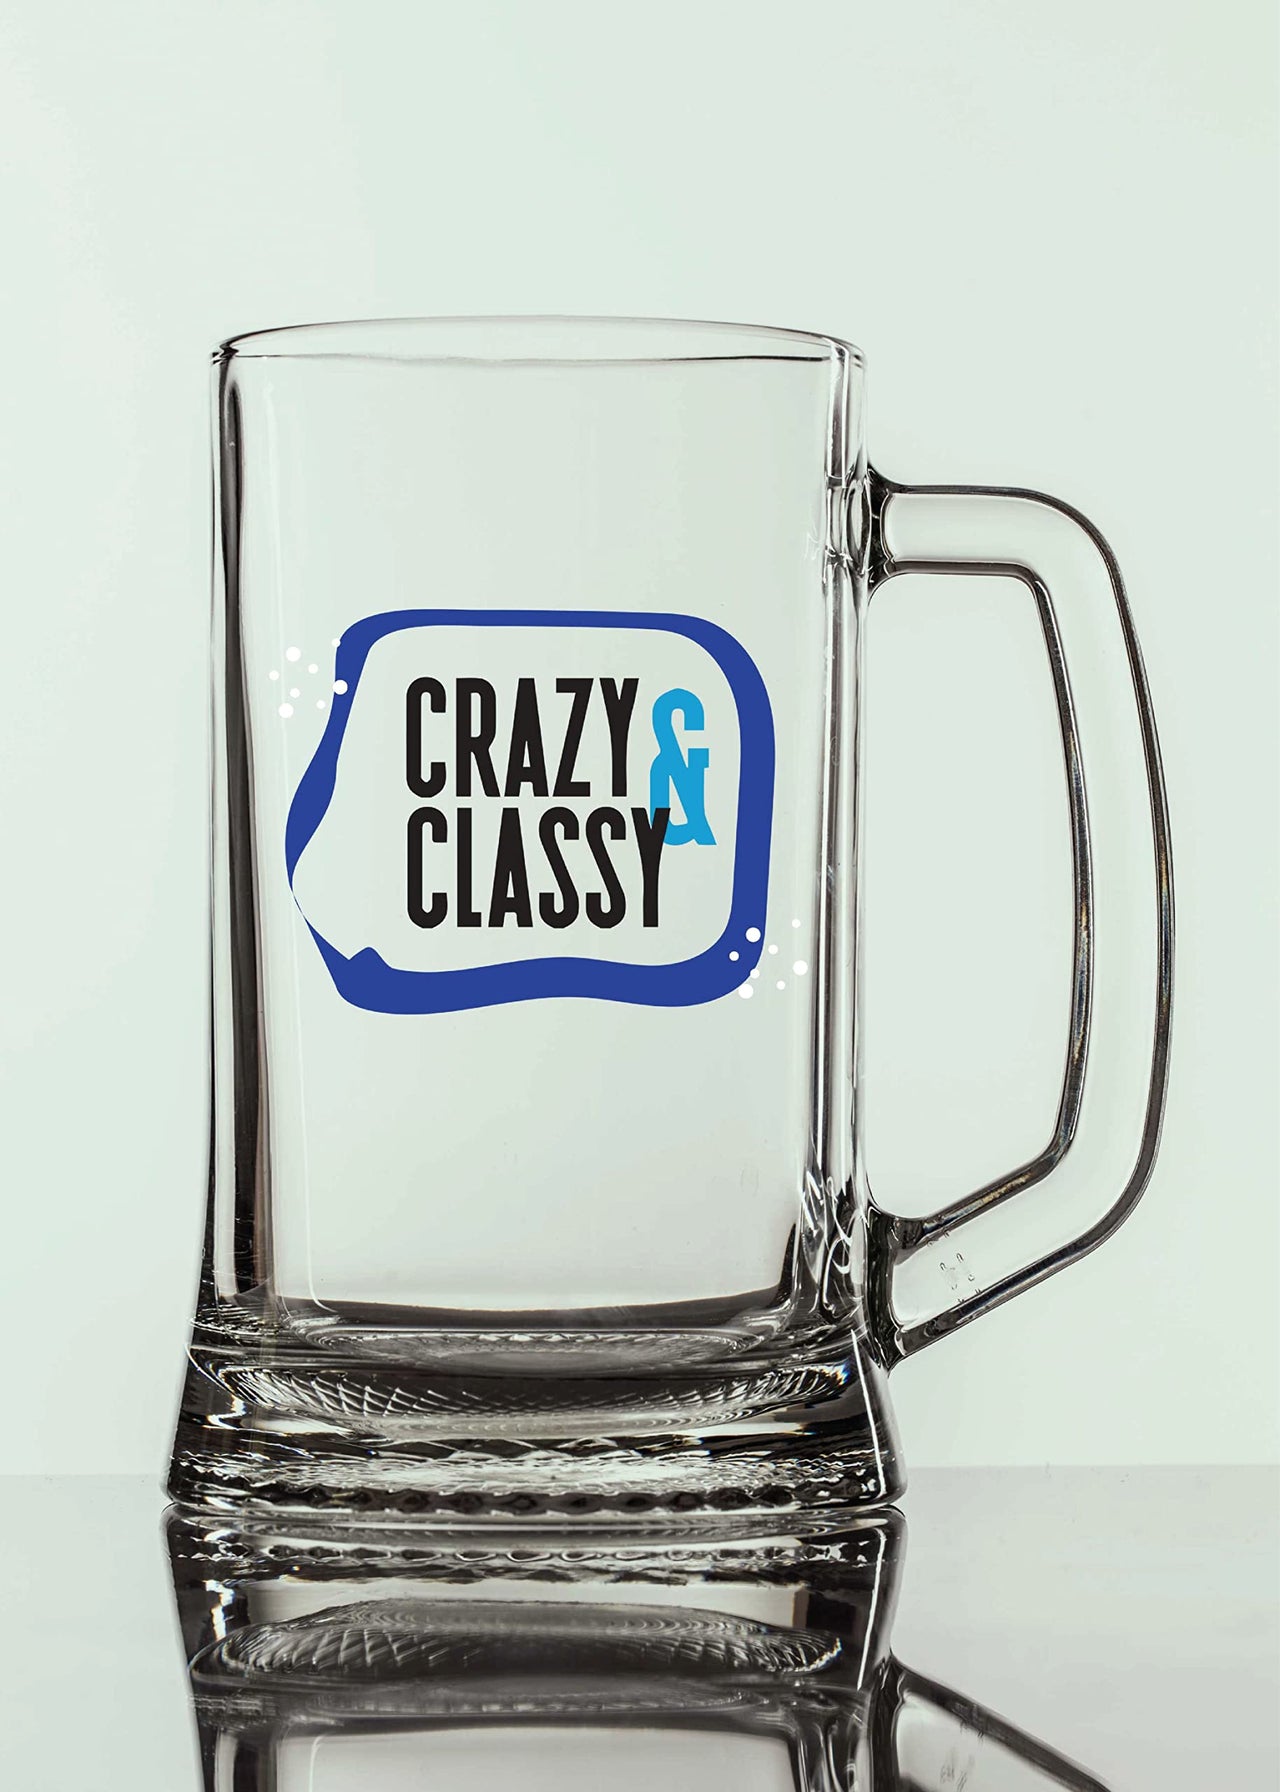 Crazy & Classy - Beer Mug - 1 Piece, Clear, 500 ml - Transparent Glass Beer Mug - Printed Beer Mug with Handle Gift for Men, Dad